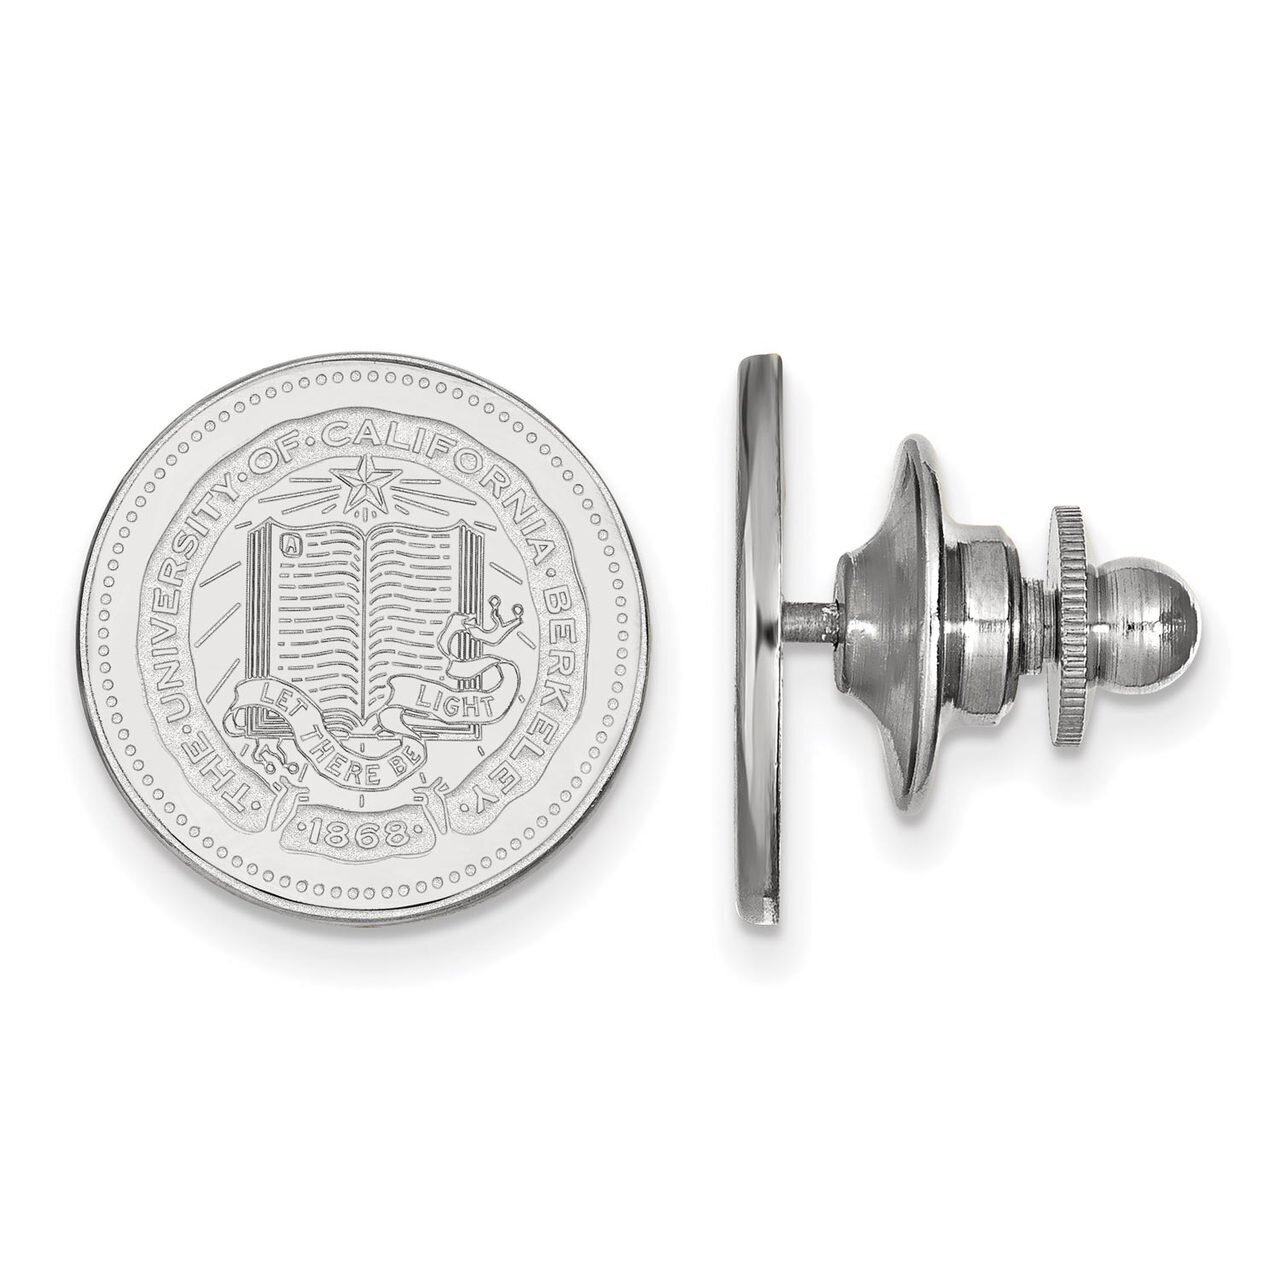 University of California Berkeley Crest Lapel Pin Sterling Silver SS040UCB